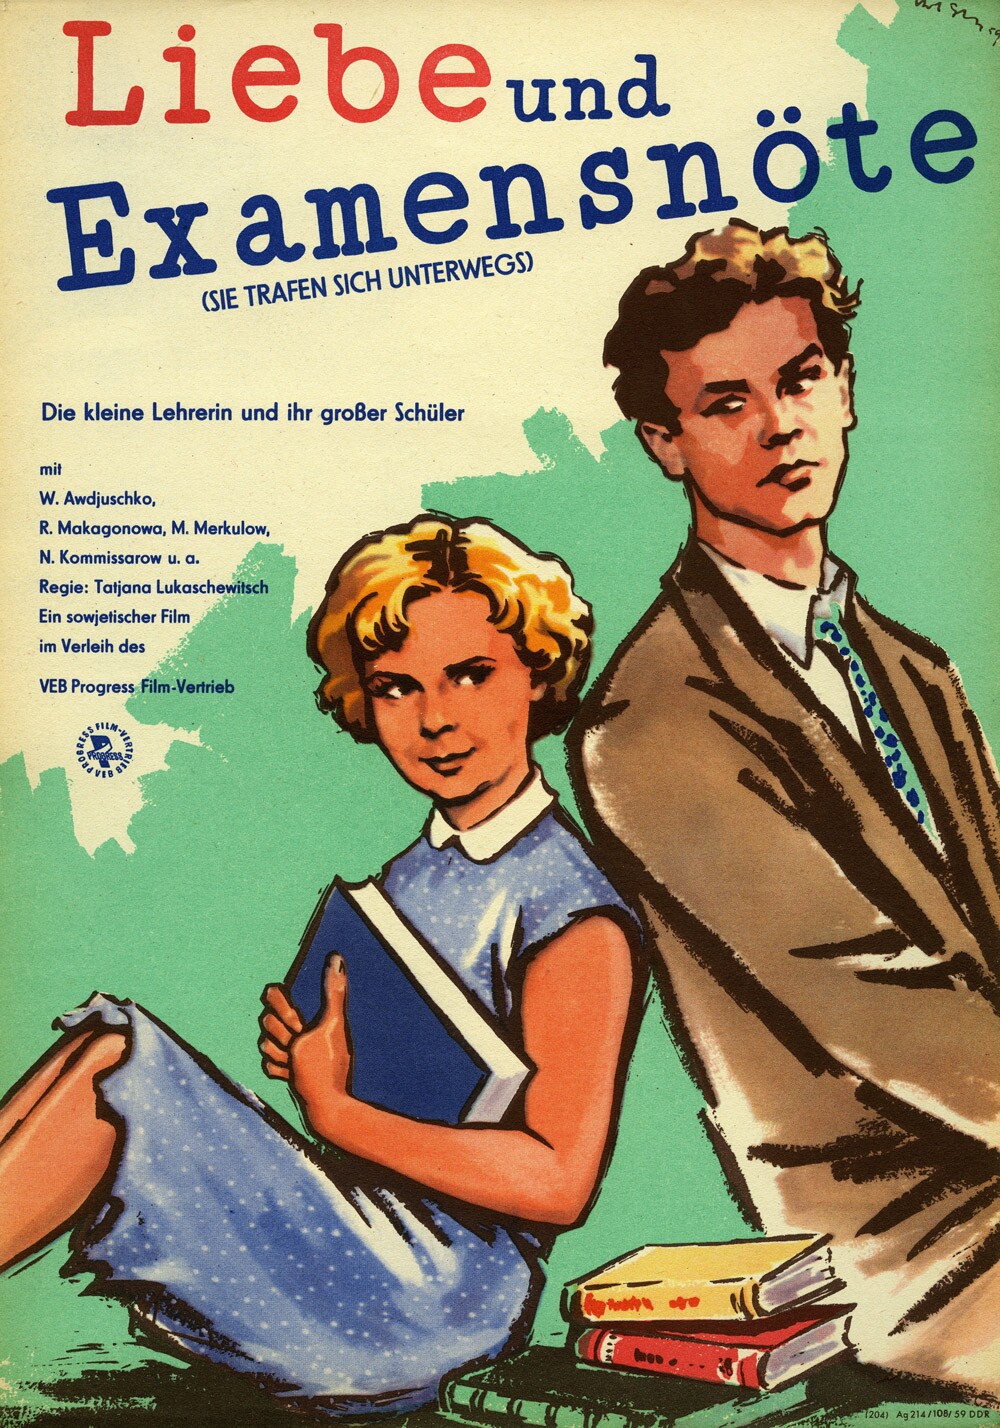 Plakat zu dem Film: Liebe und Examensnöte (Filmmuseum Potsdam / DEFA-Stiftung RR-F)